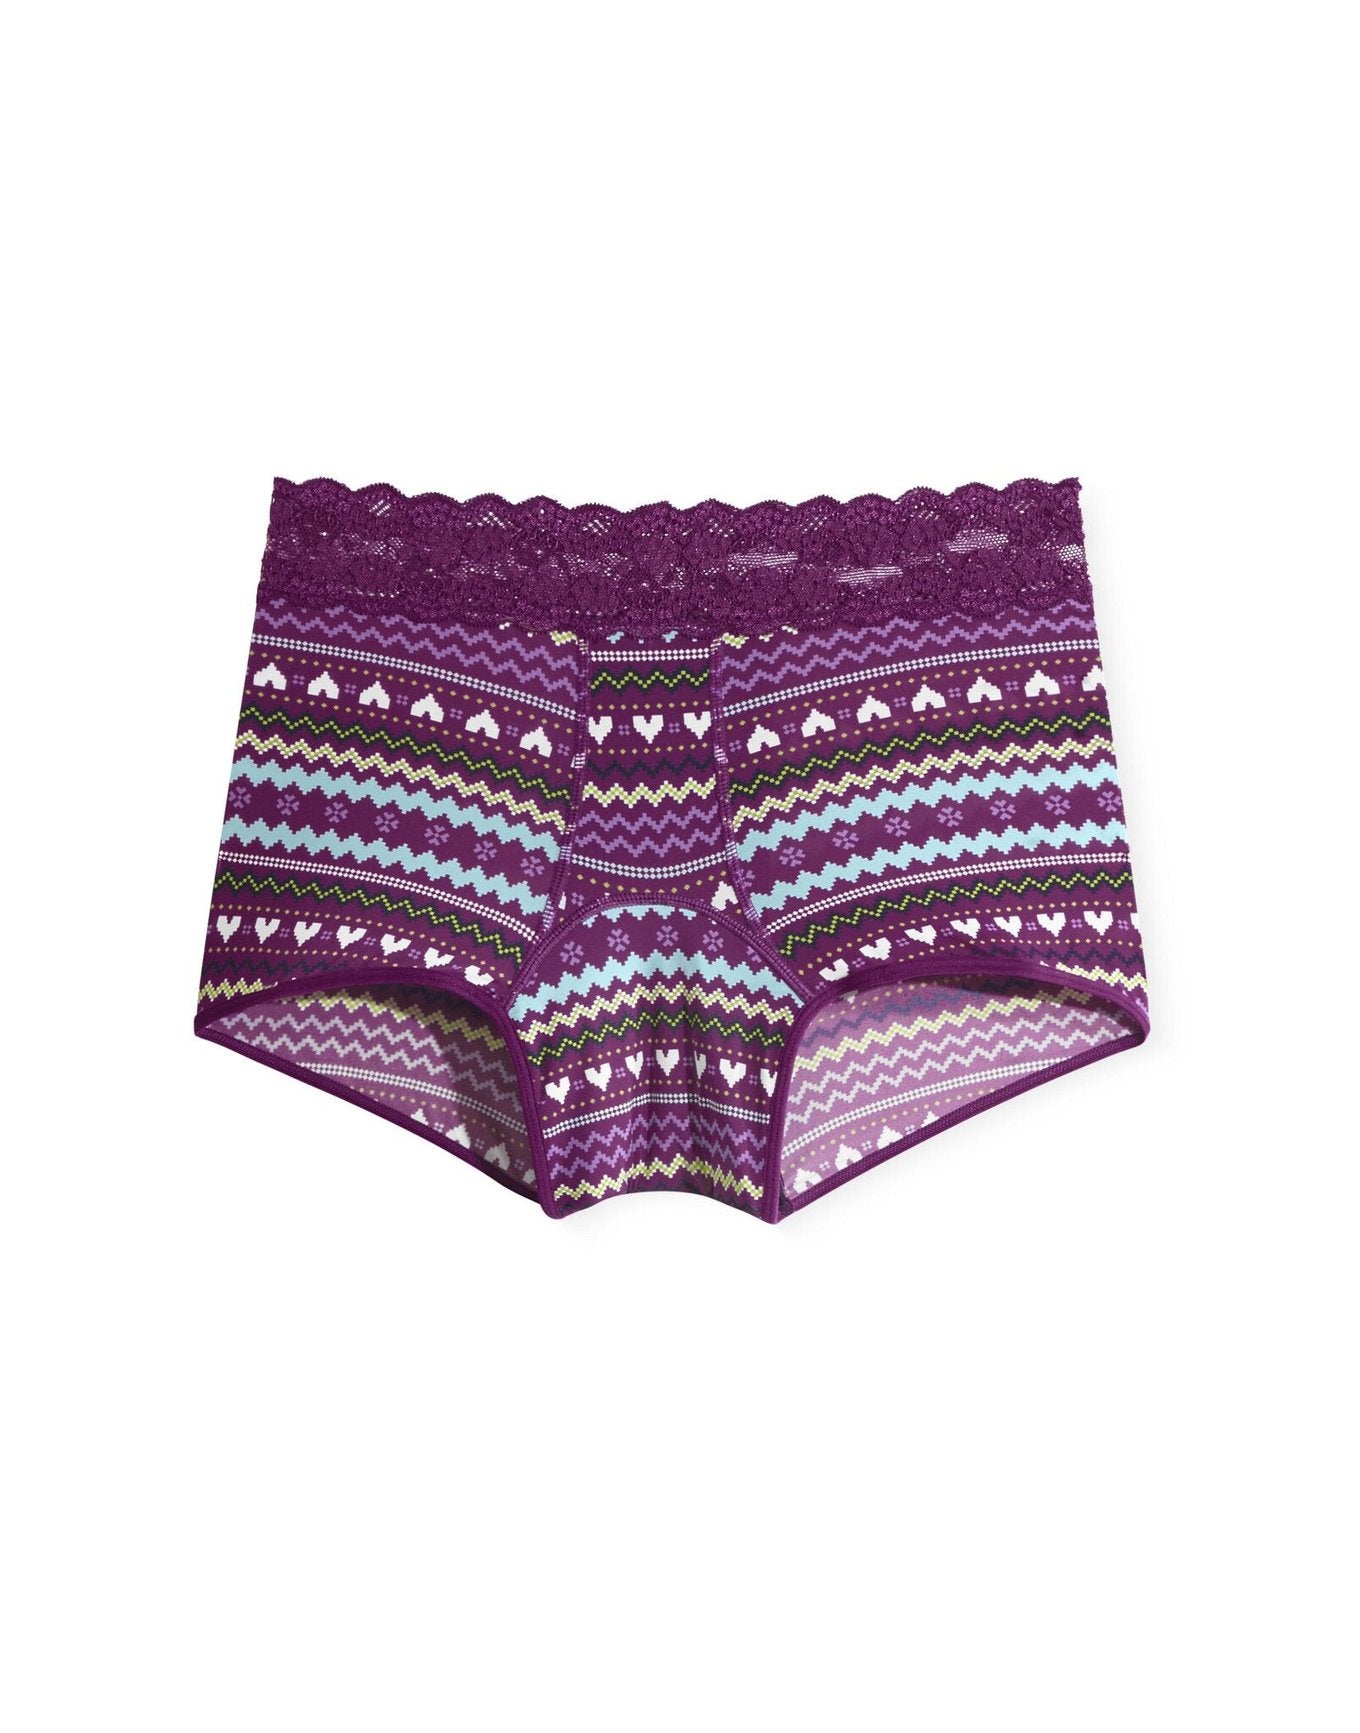 Joyja Emily period-proof panty in color Joyful Fair Isle C01 and shape shortie